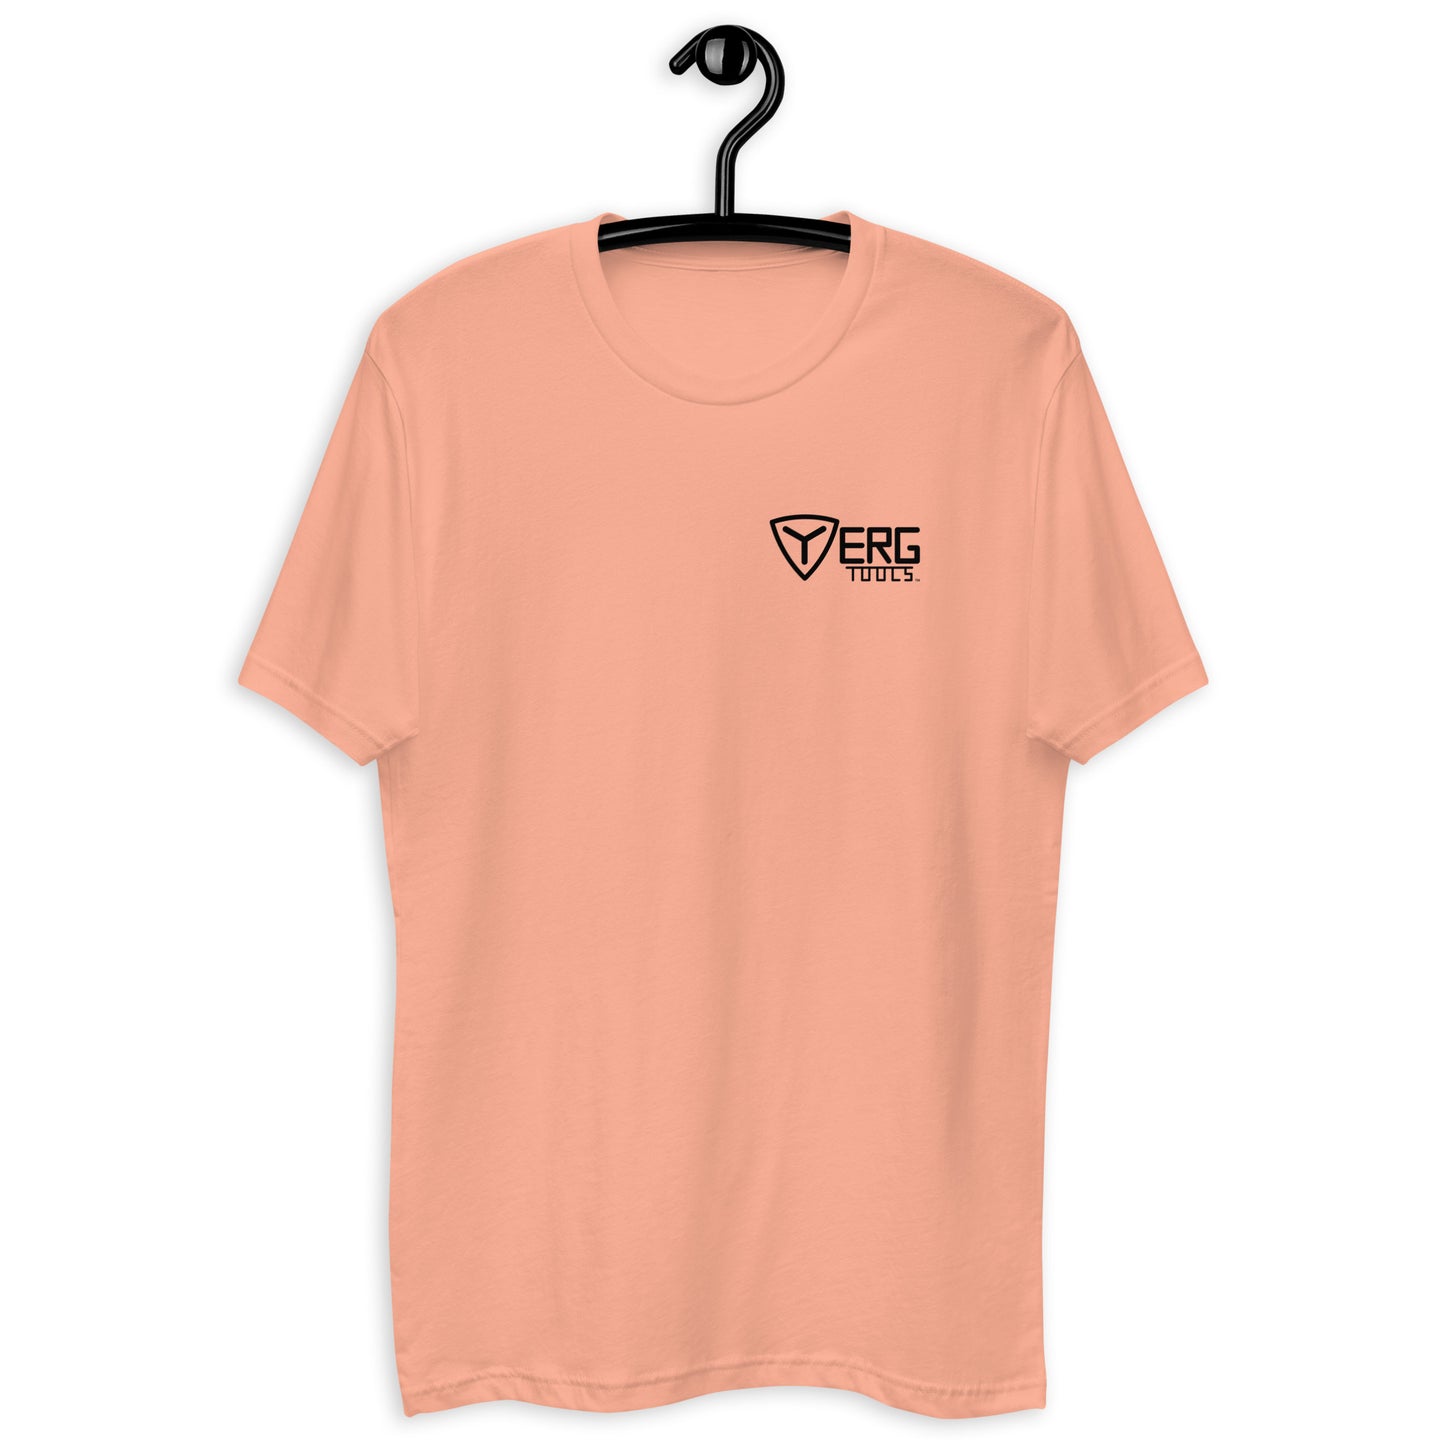 Yerg Tools Logo T-shirt